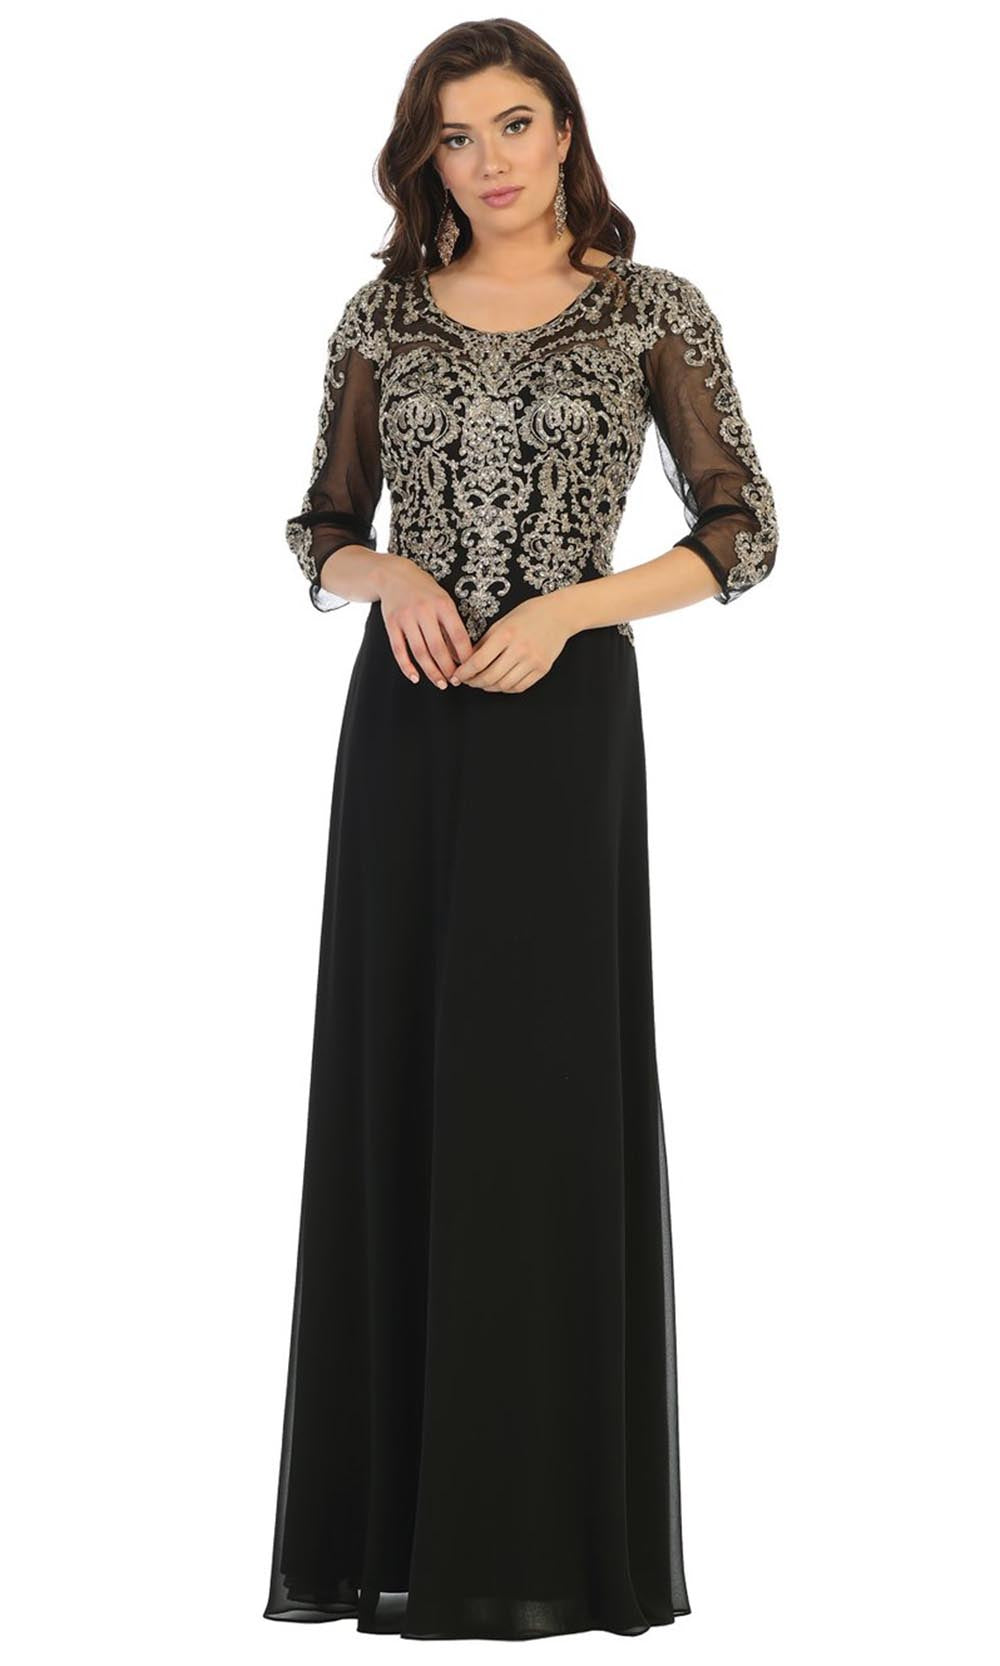 May Queen - MQ1670 Beaded Applique Formal Dress In Black